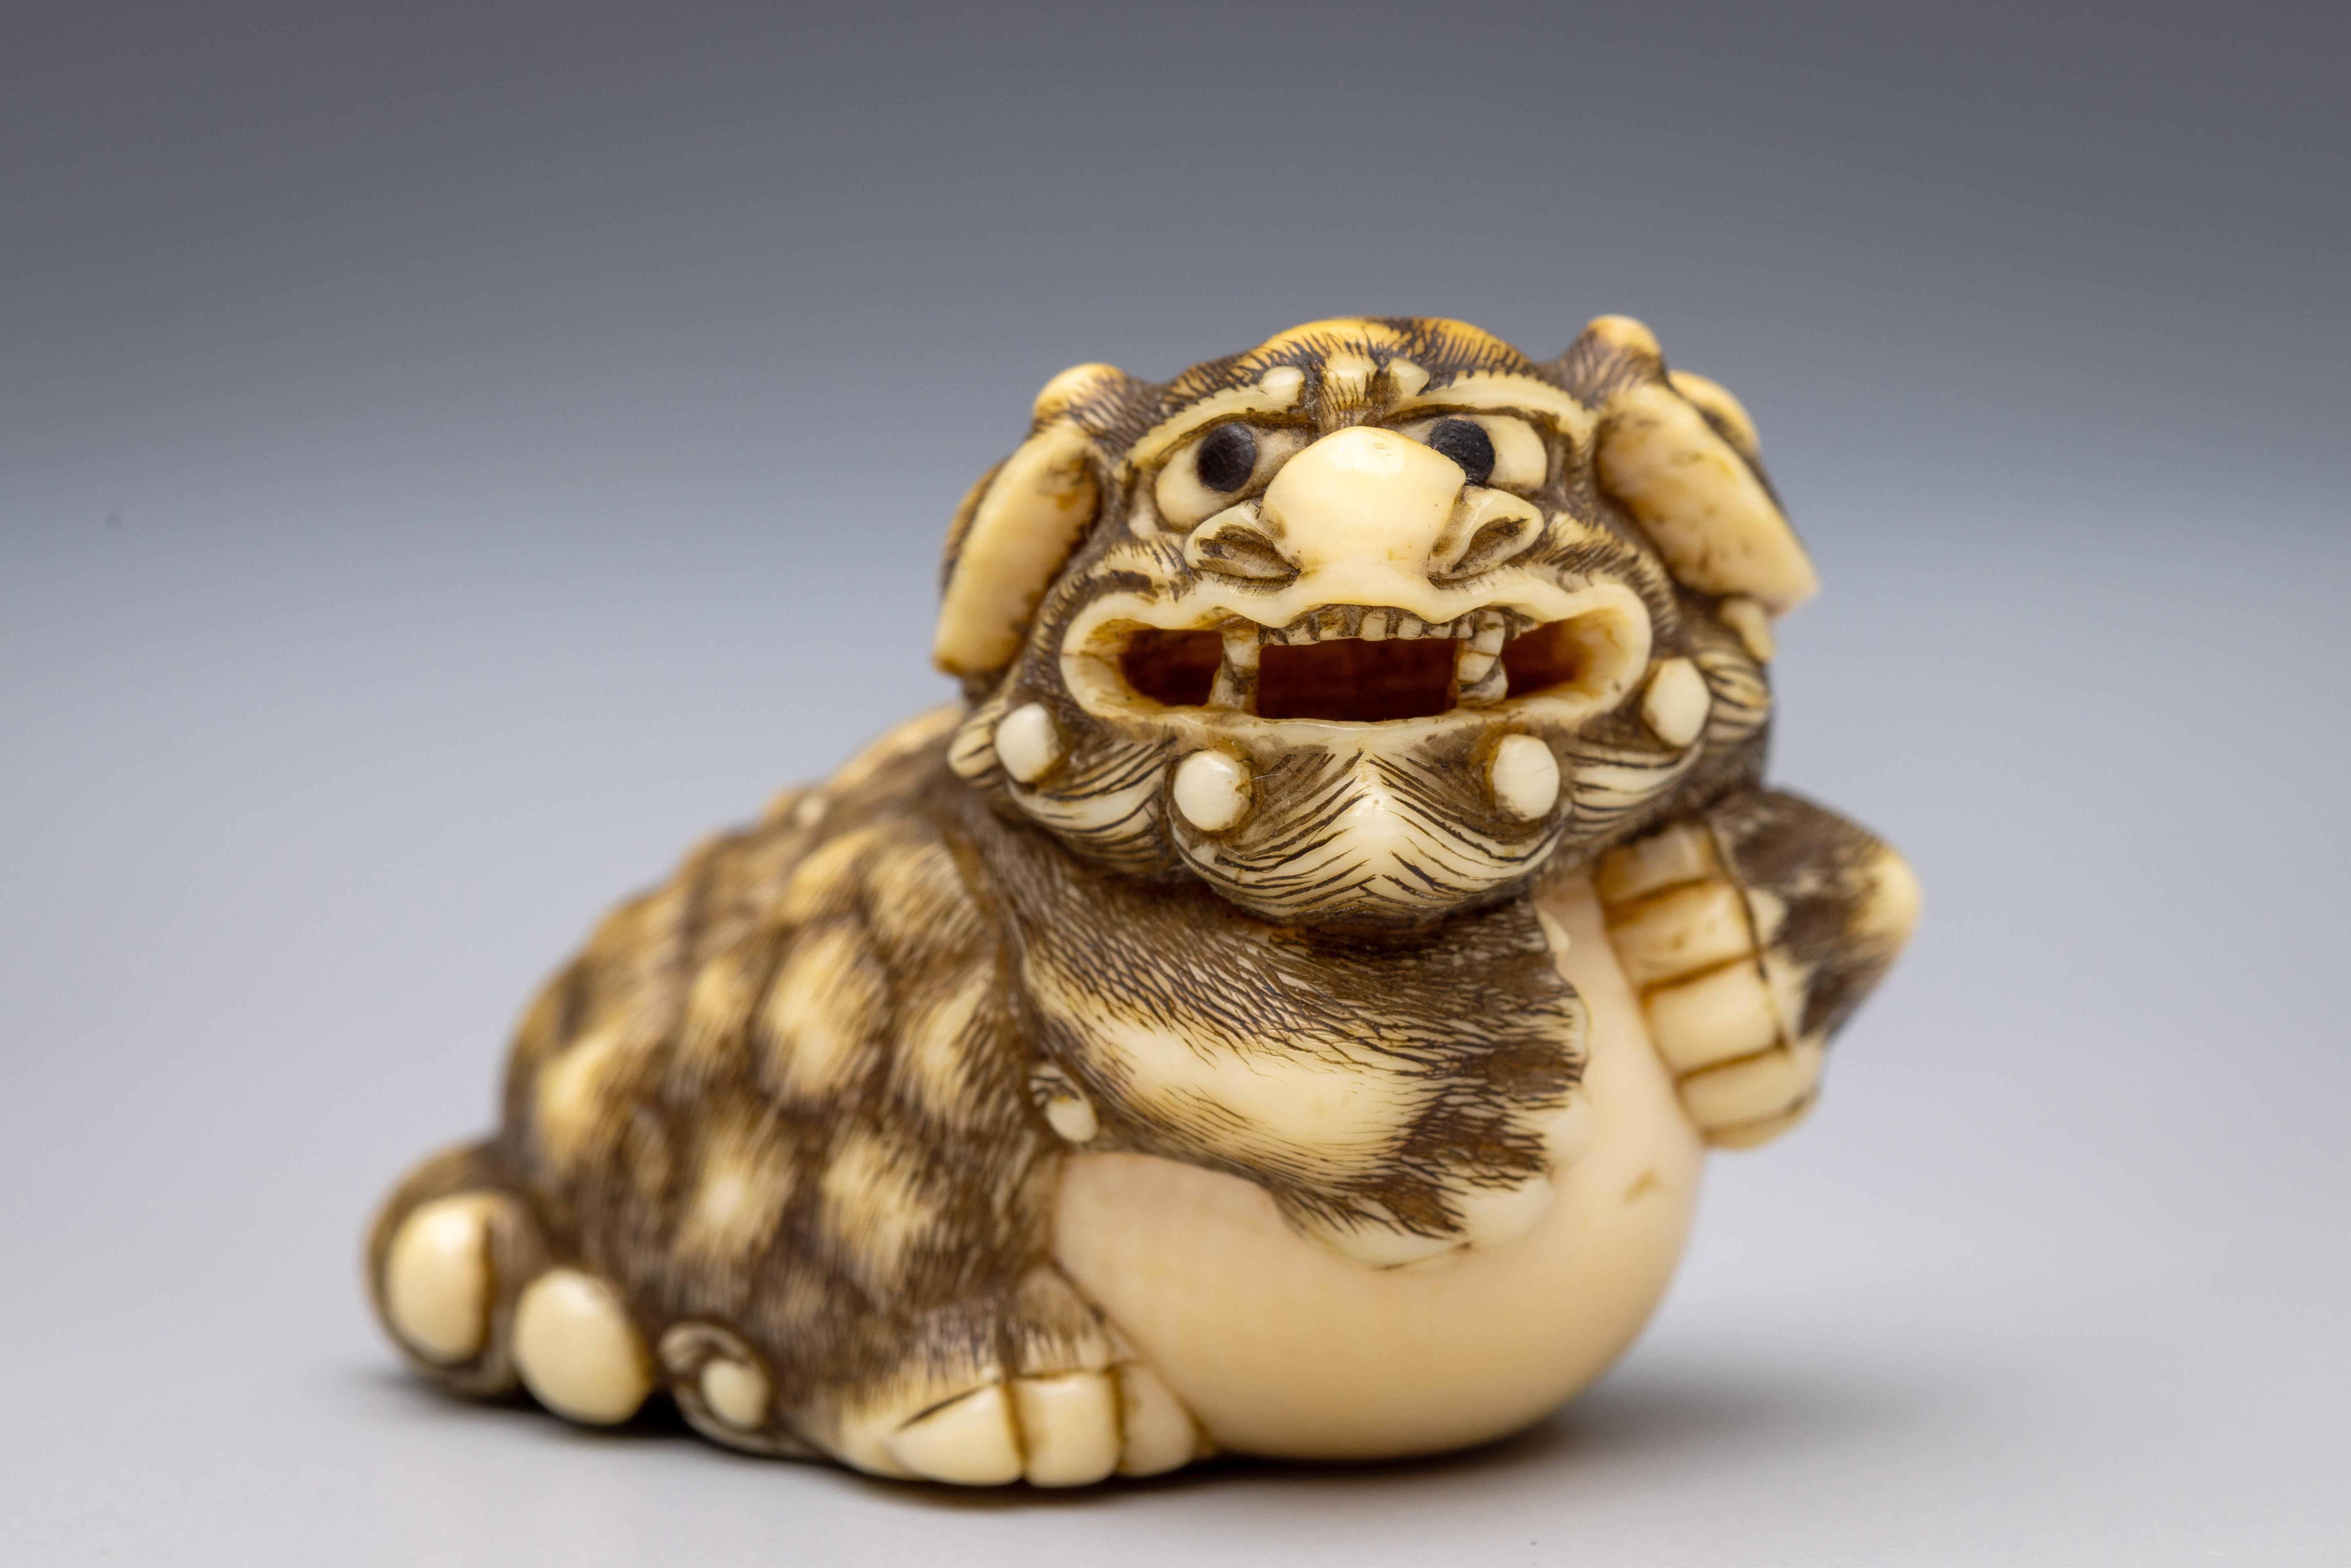 Japan, an ivory netsuke, Edo period (1603-1868), late 18th/ 19th century,